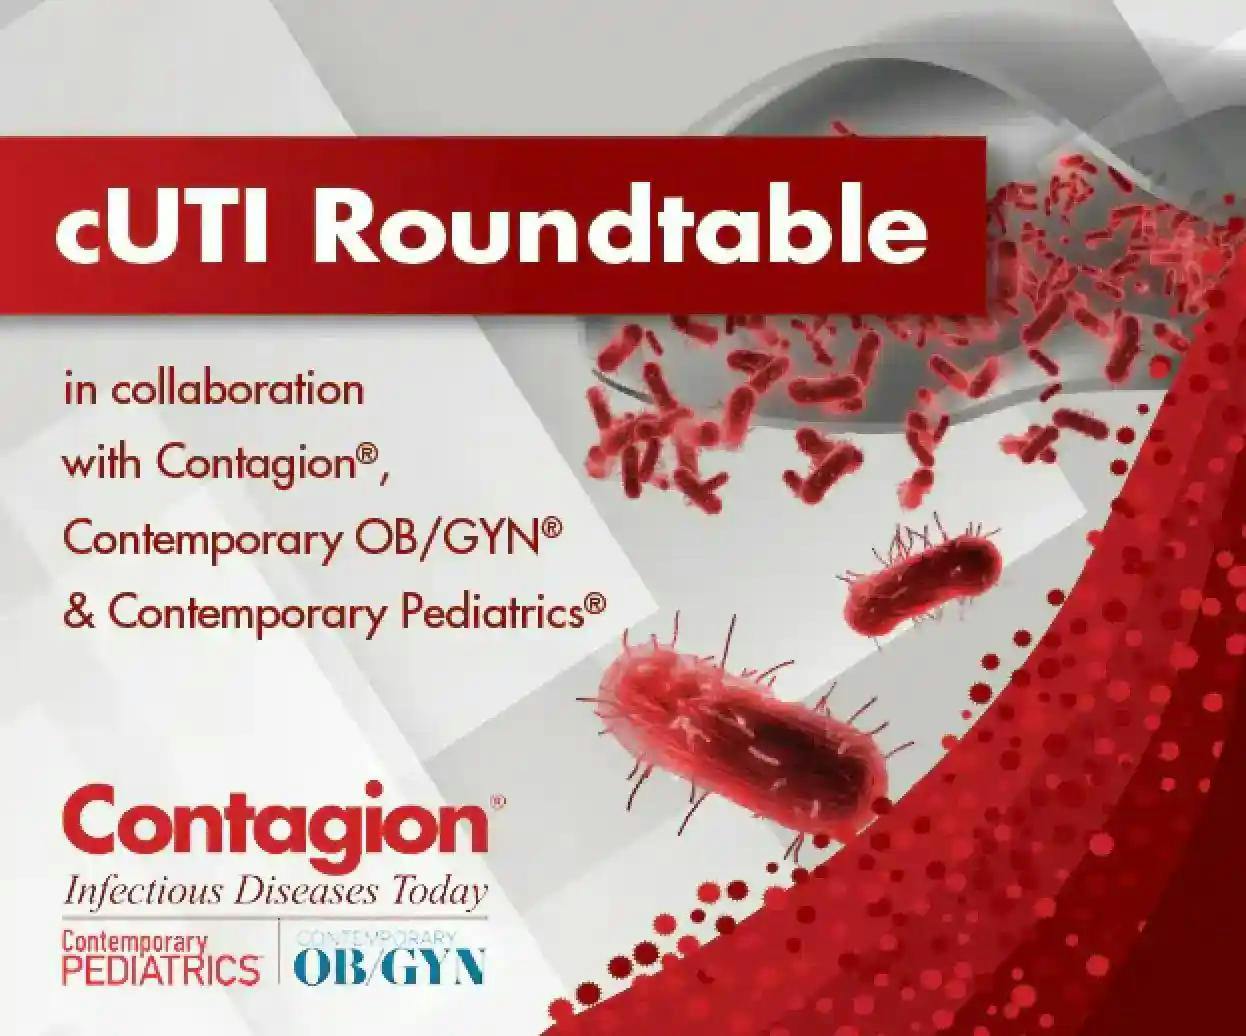 cUTI Roundtable: The latest therapeutic developments